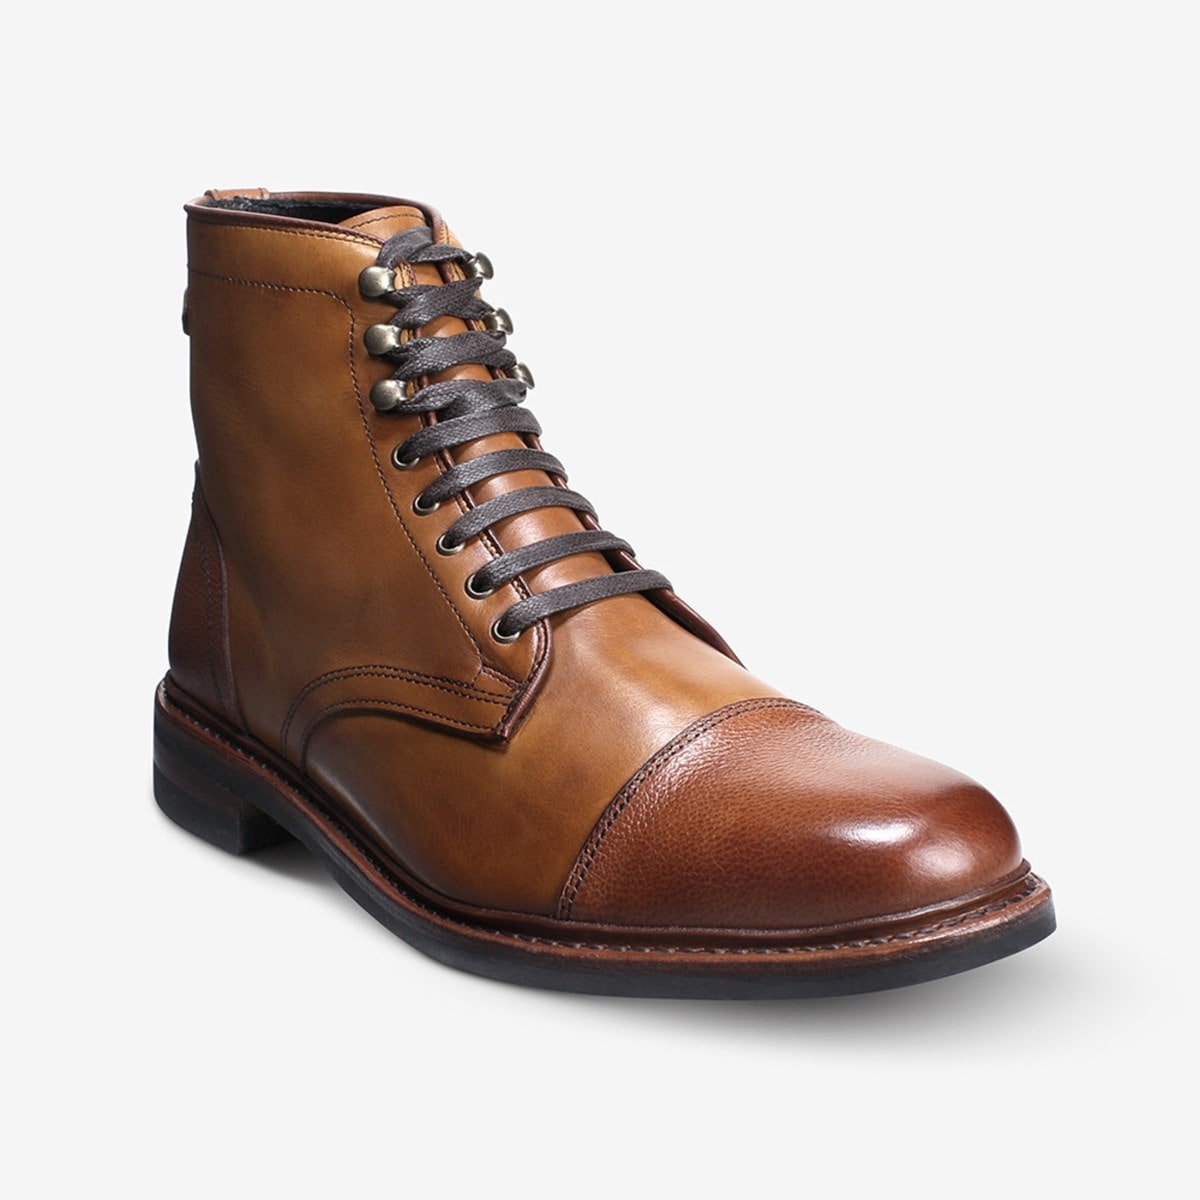 Landon Cap-toe Boot | Men's Boots | Allen Edmonds